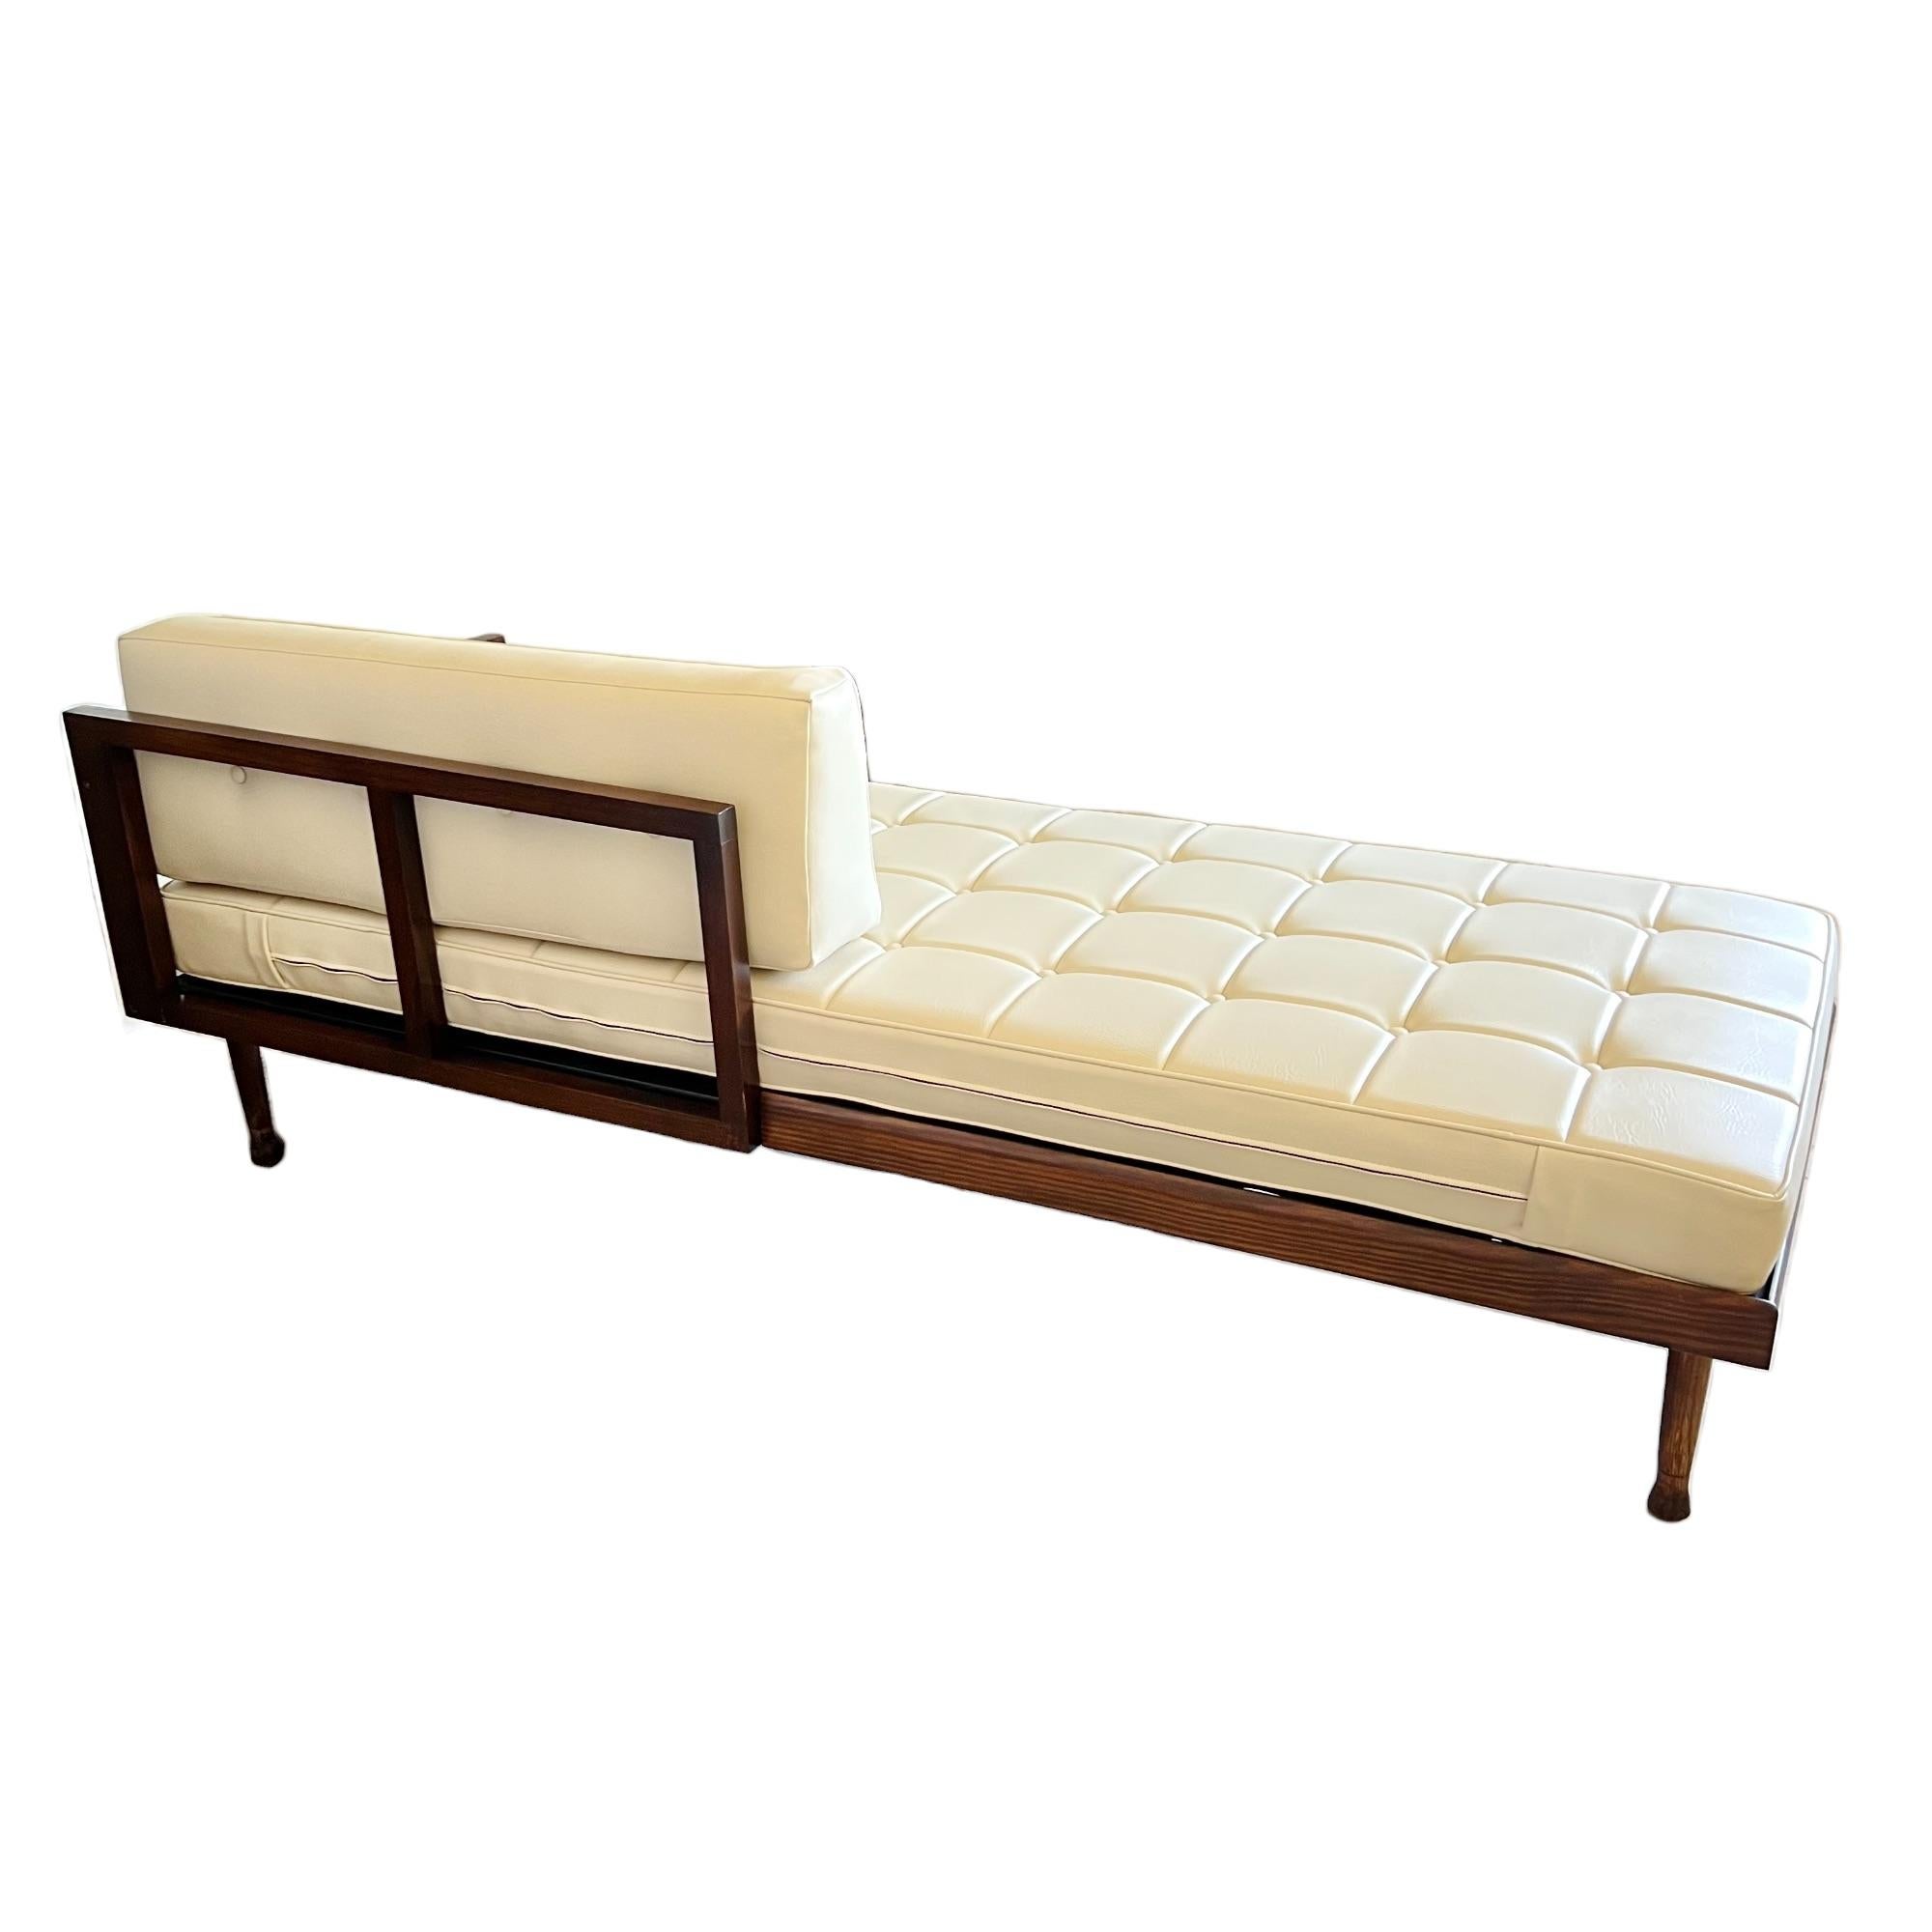 Mid-20th Century Mid-Century Modern Walnut & Tufted Vinyl Daybed Sofa, 1950s